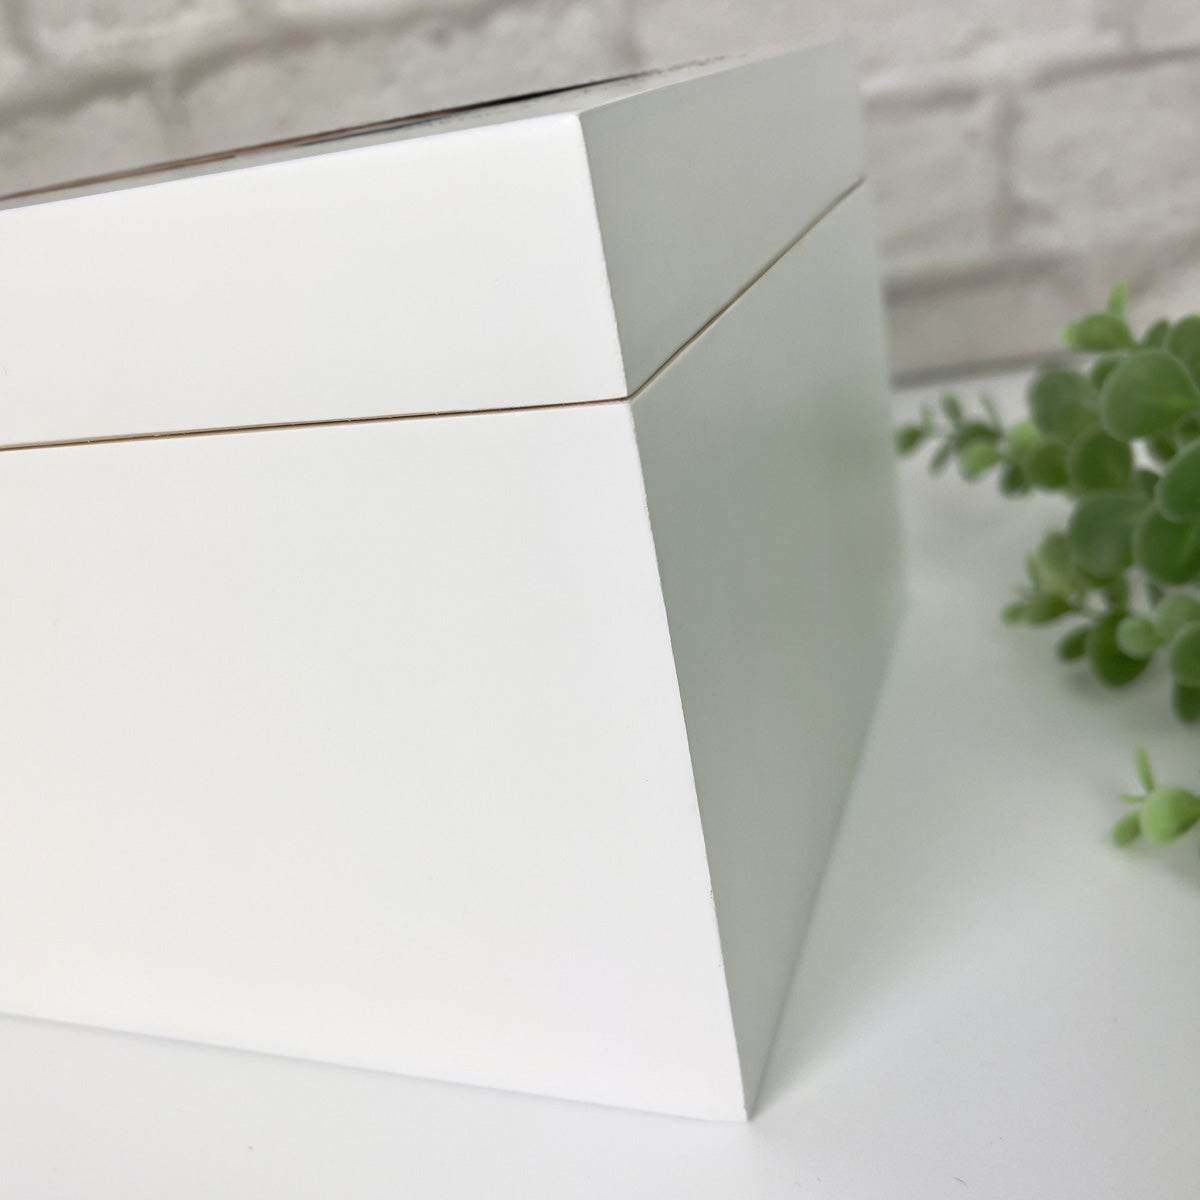 Personalised Paw Prints Luxury Pet Memorial White Wooden Photo Memory Box - 3 Sizes (22cm | 27cm | 30cm)